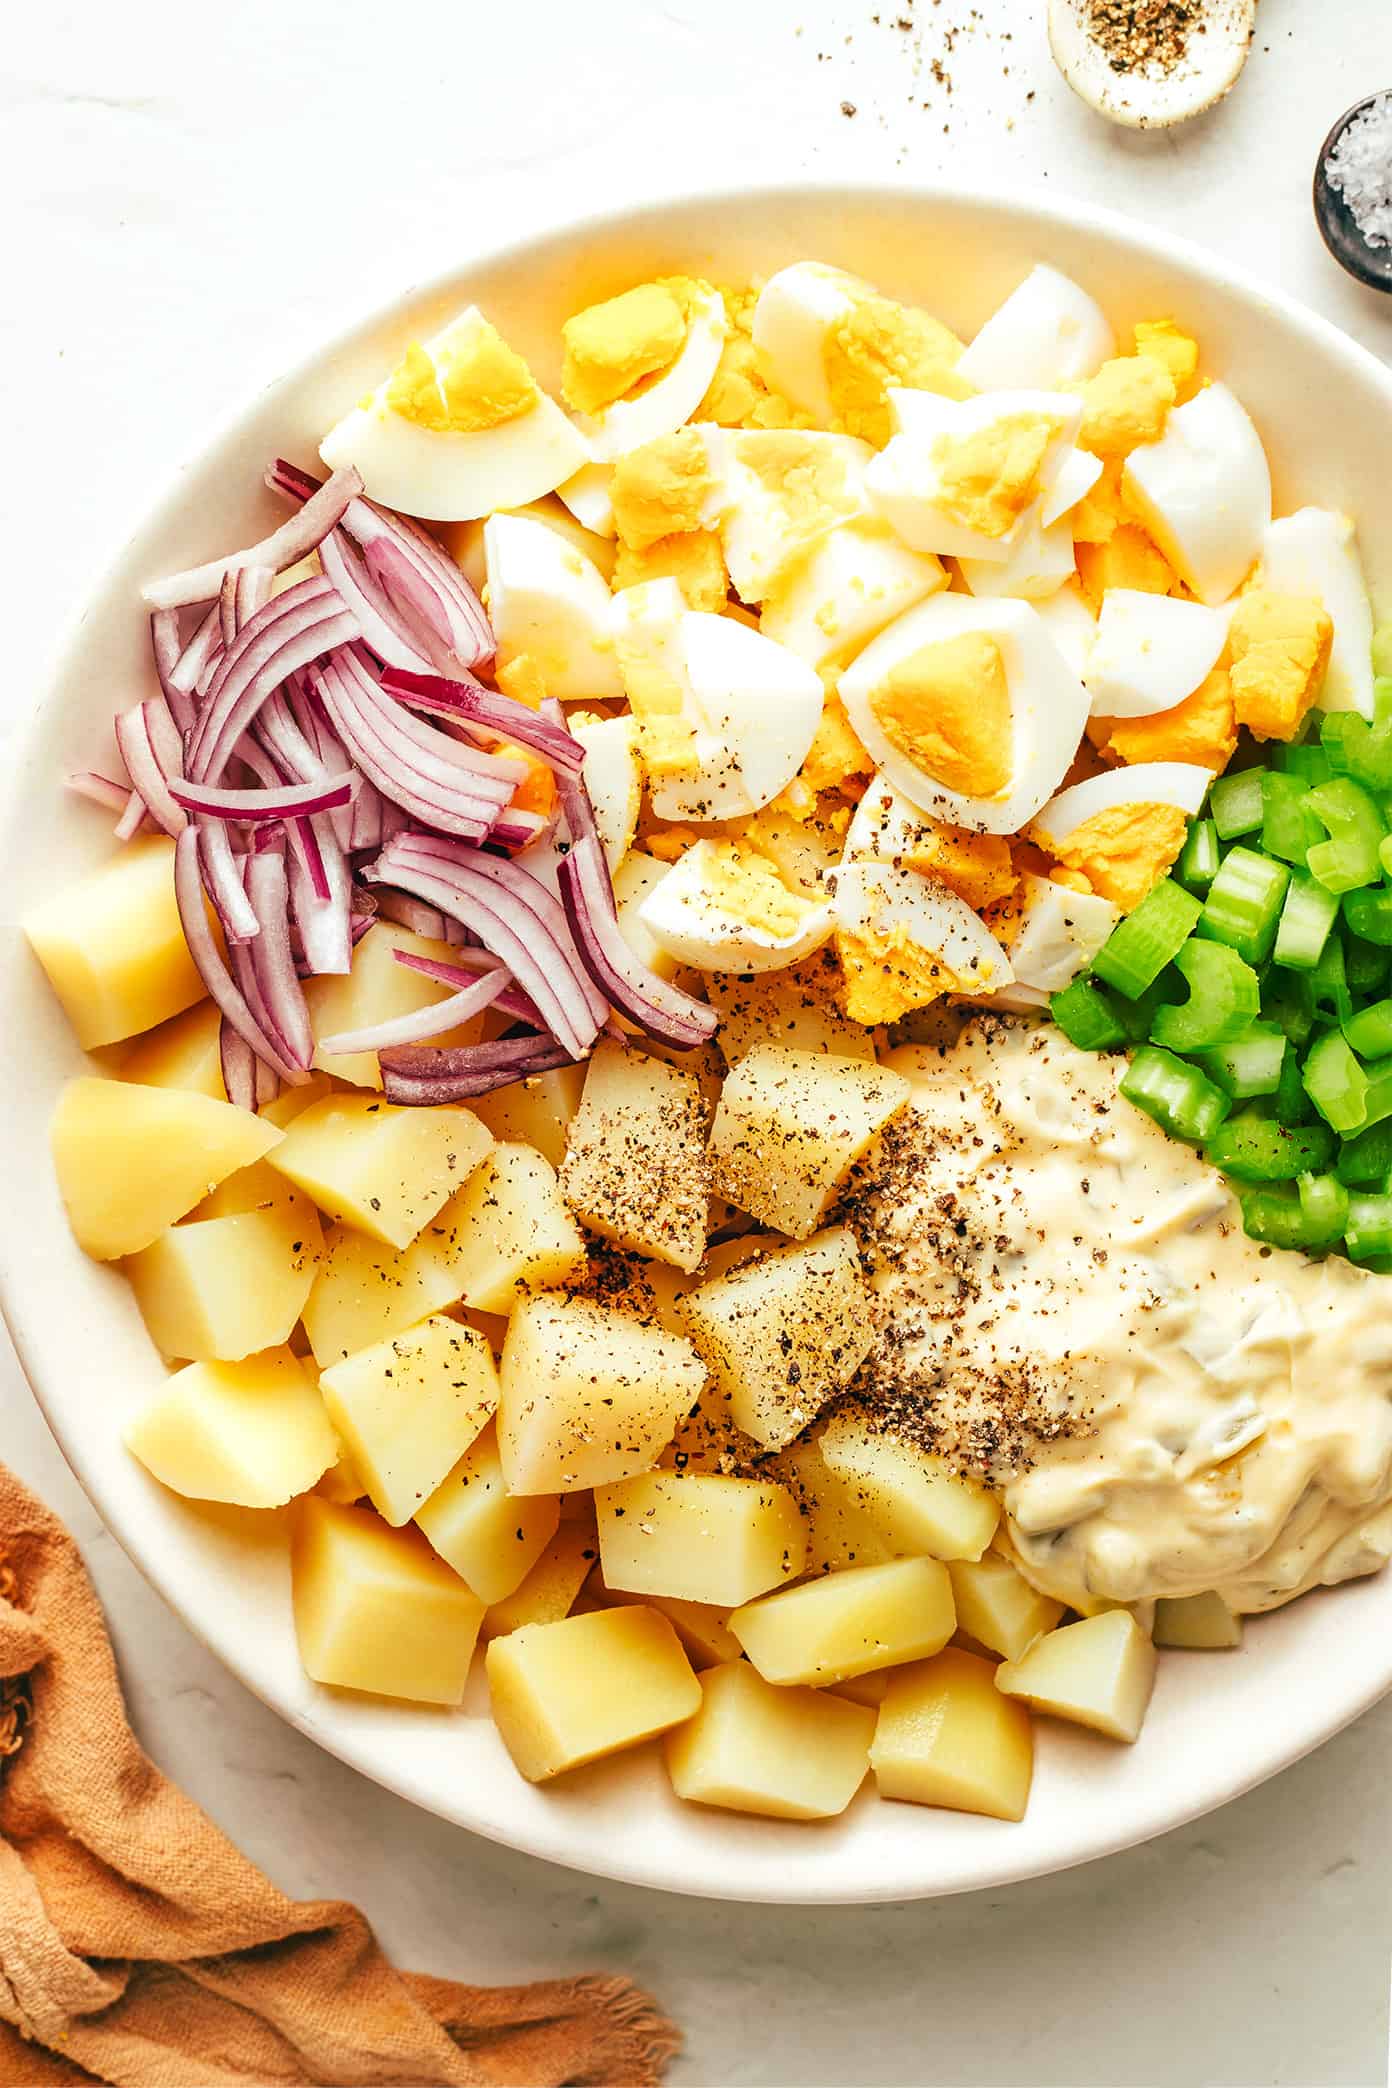 Potato Salad Ingredients In A Bowl